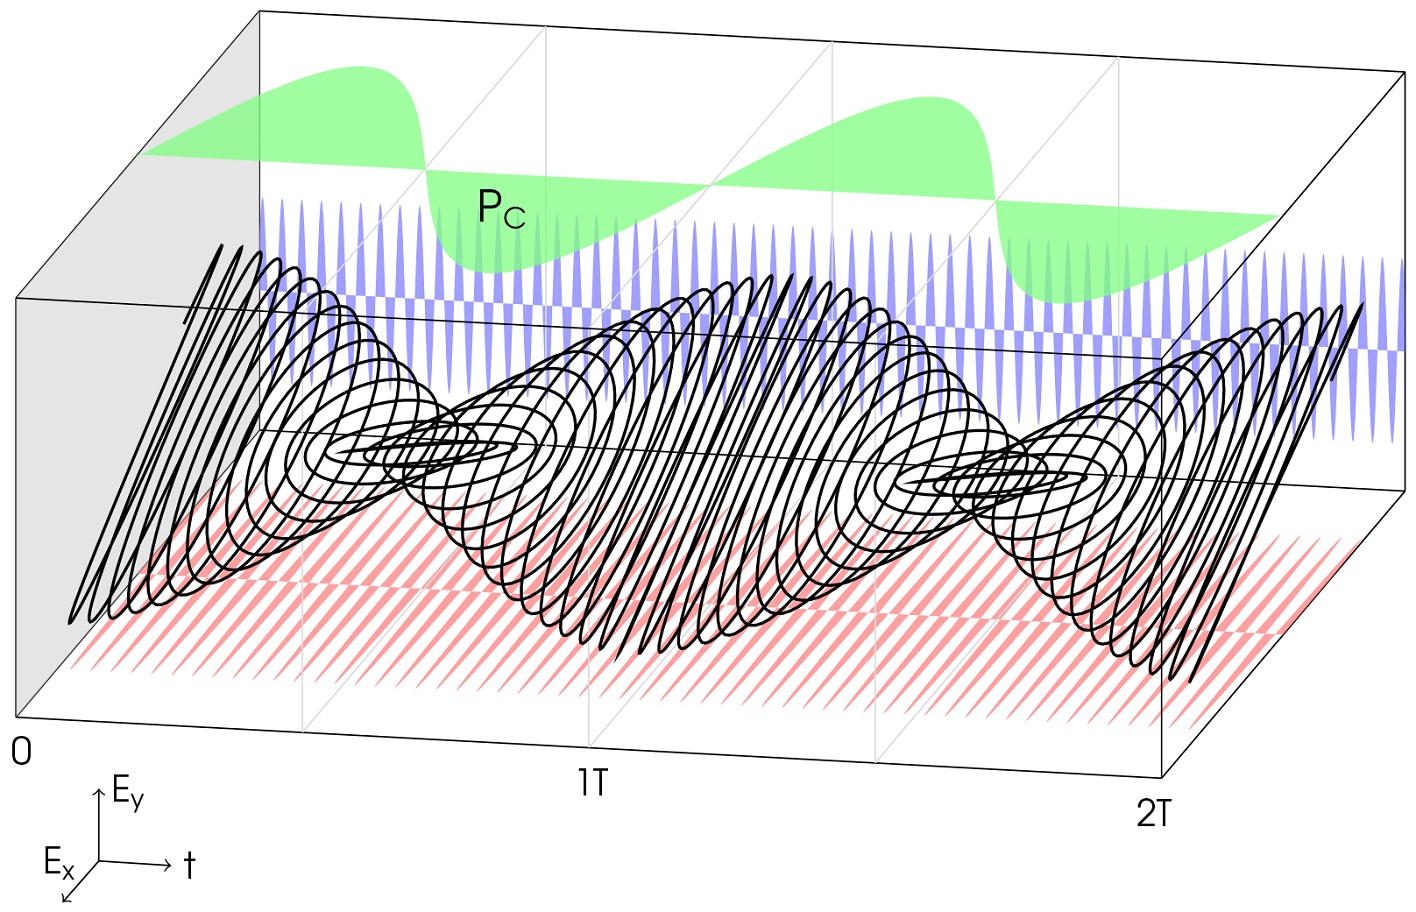 The polarisation describes a light wave’s oscillation direction